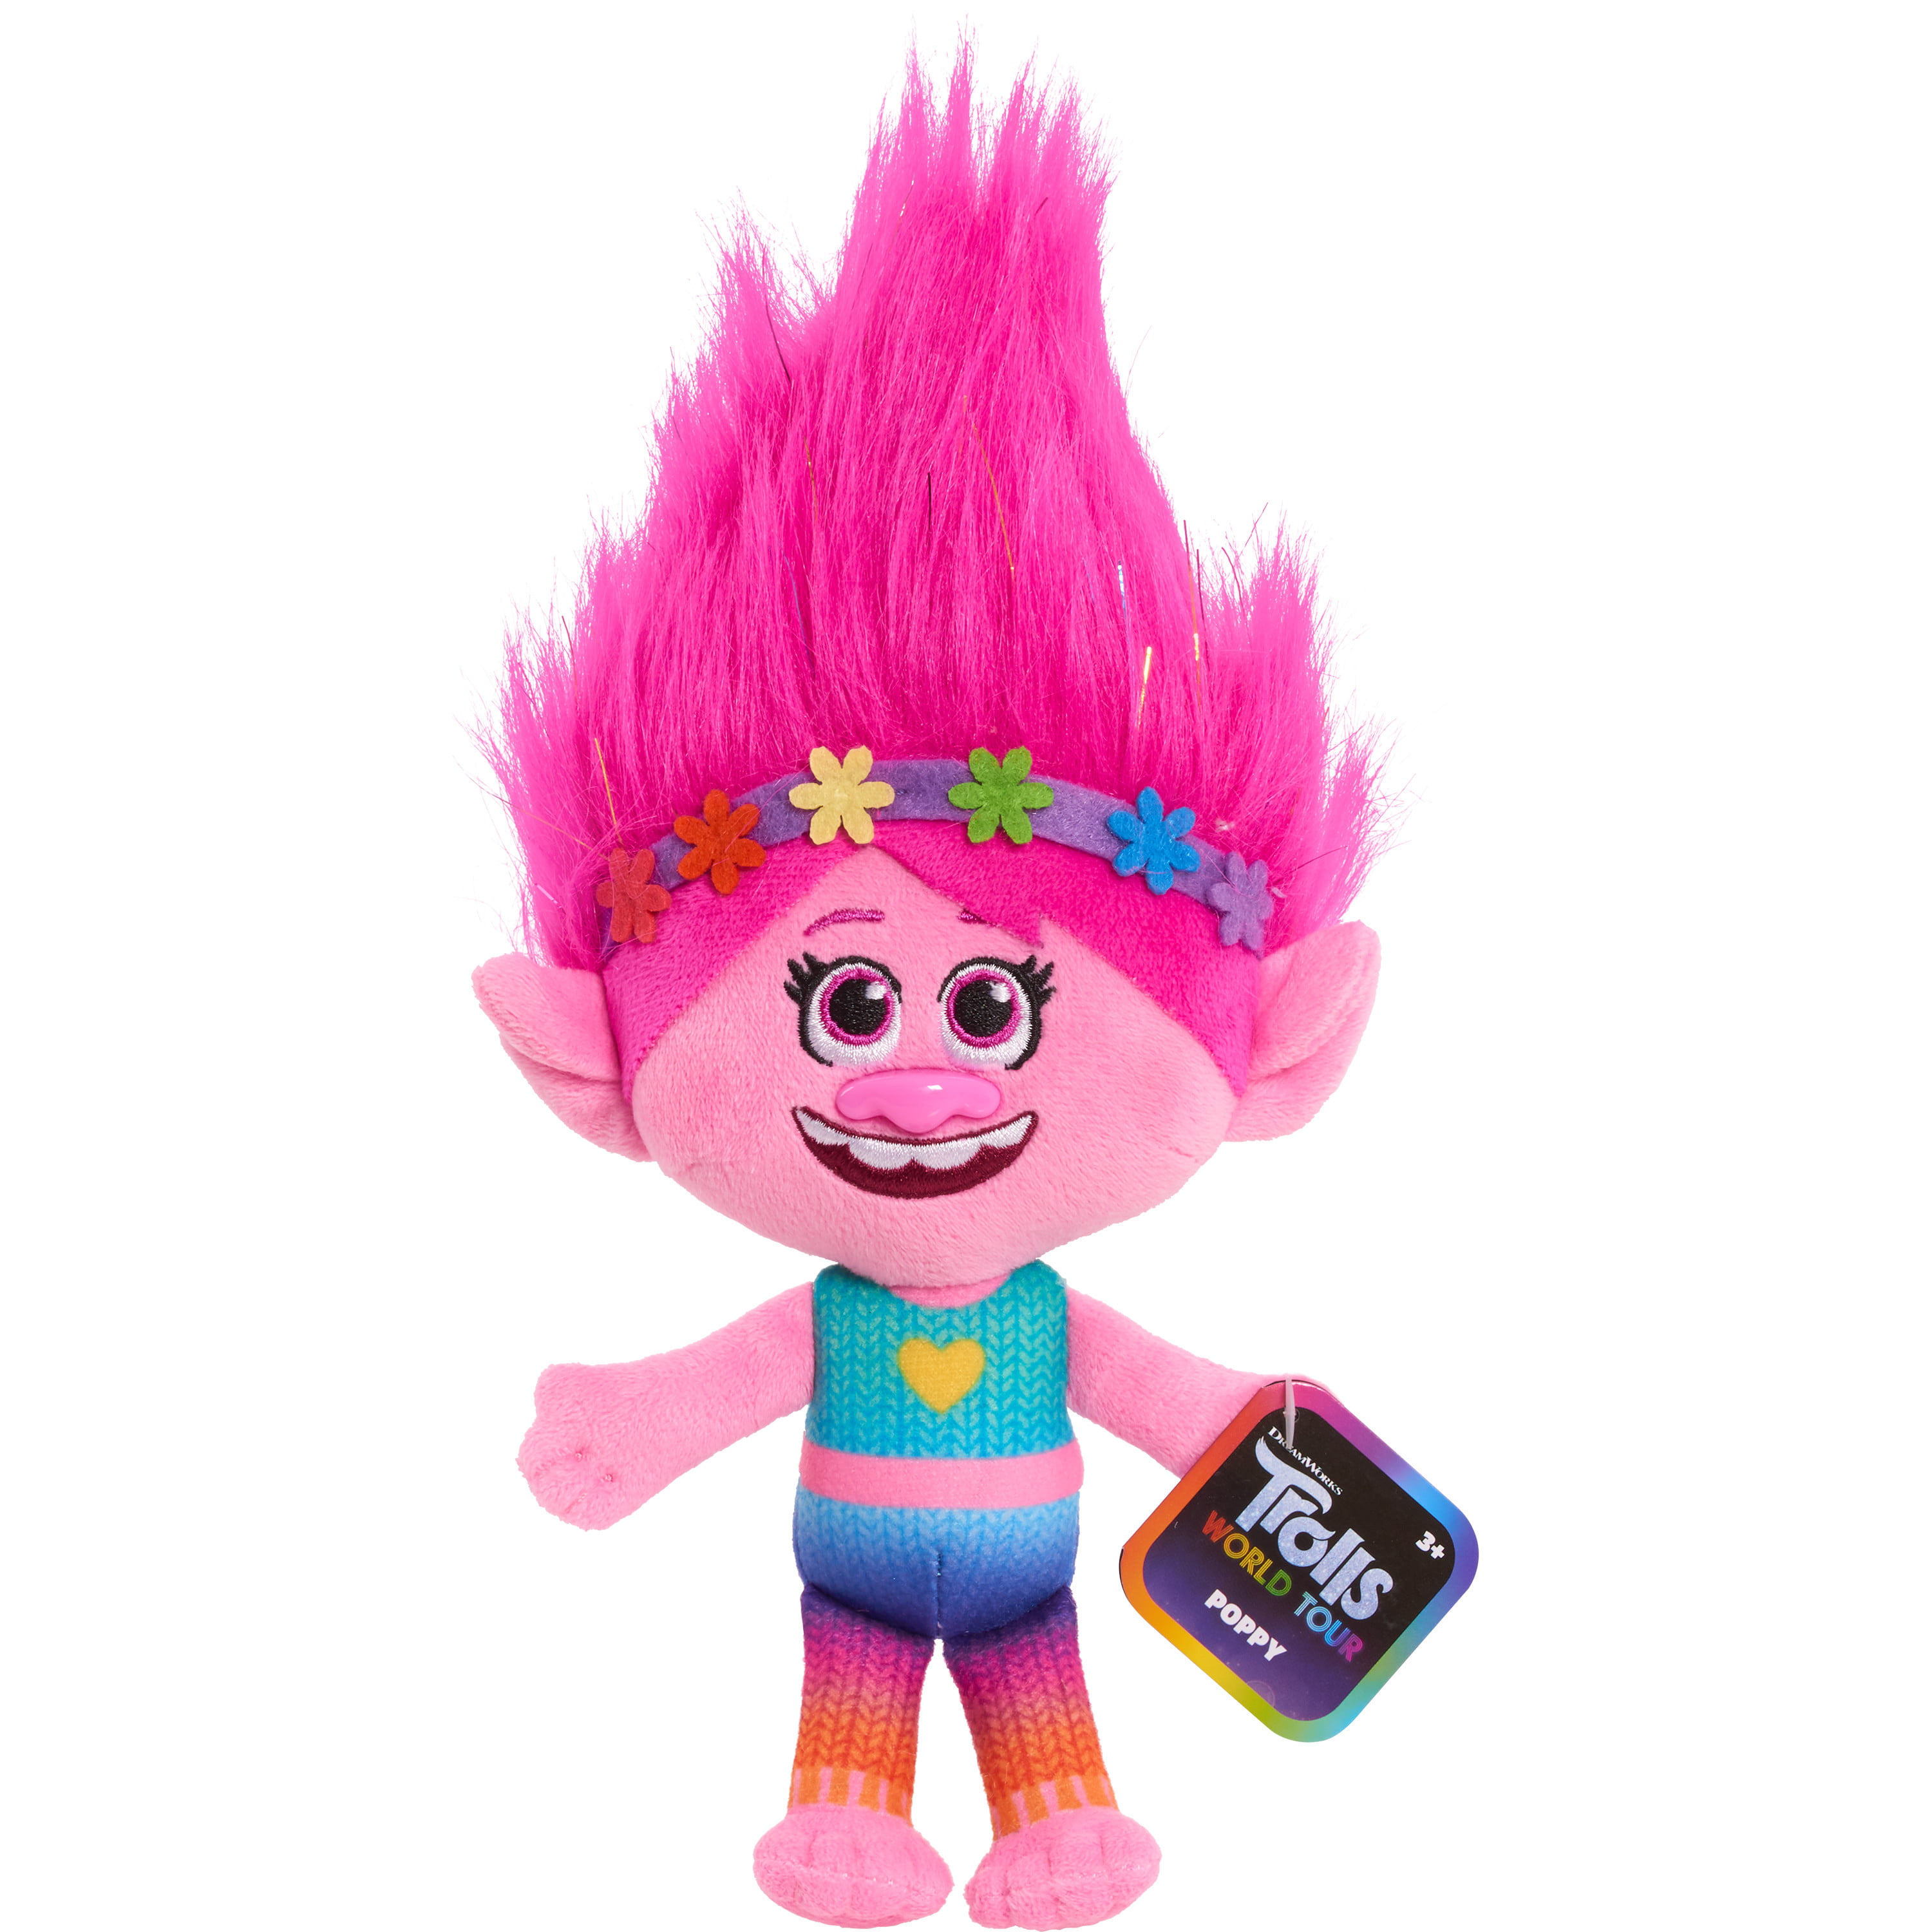 Poppy Trolls World Tour Plush Figure 8/" toy New with tag